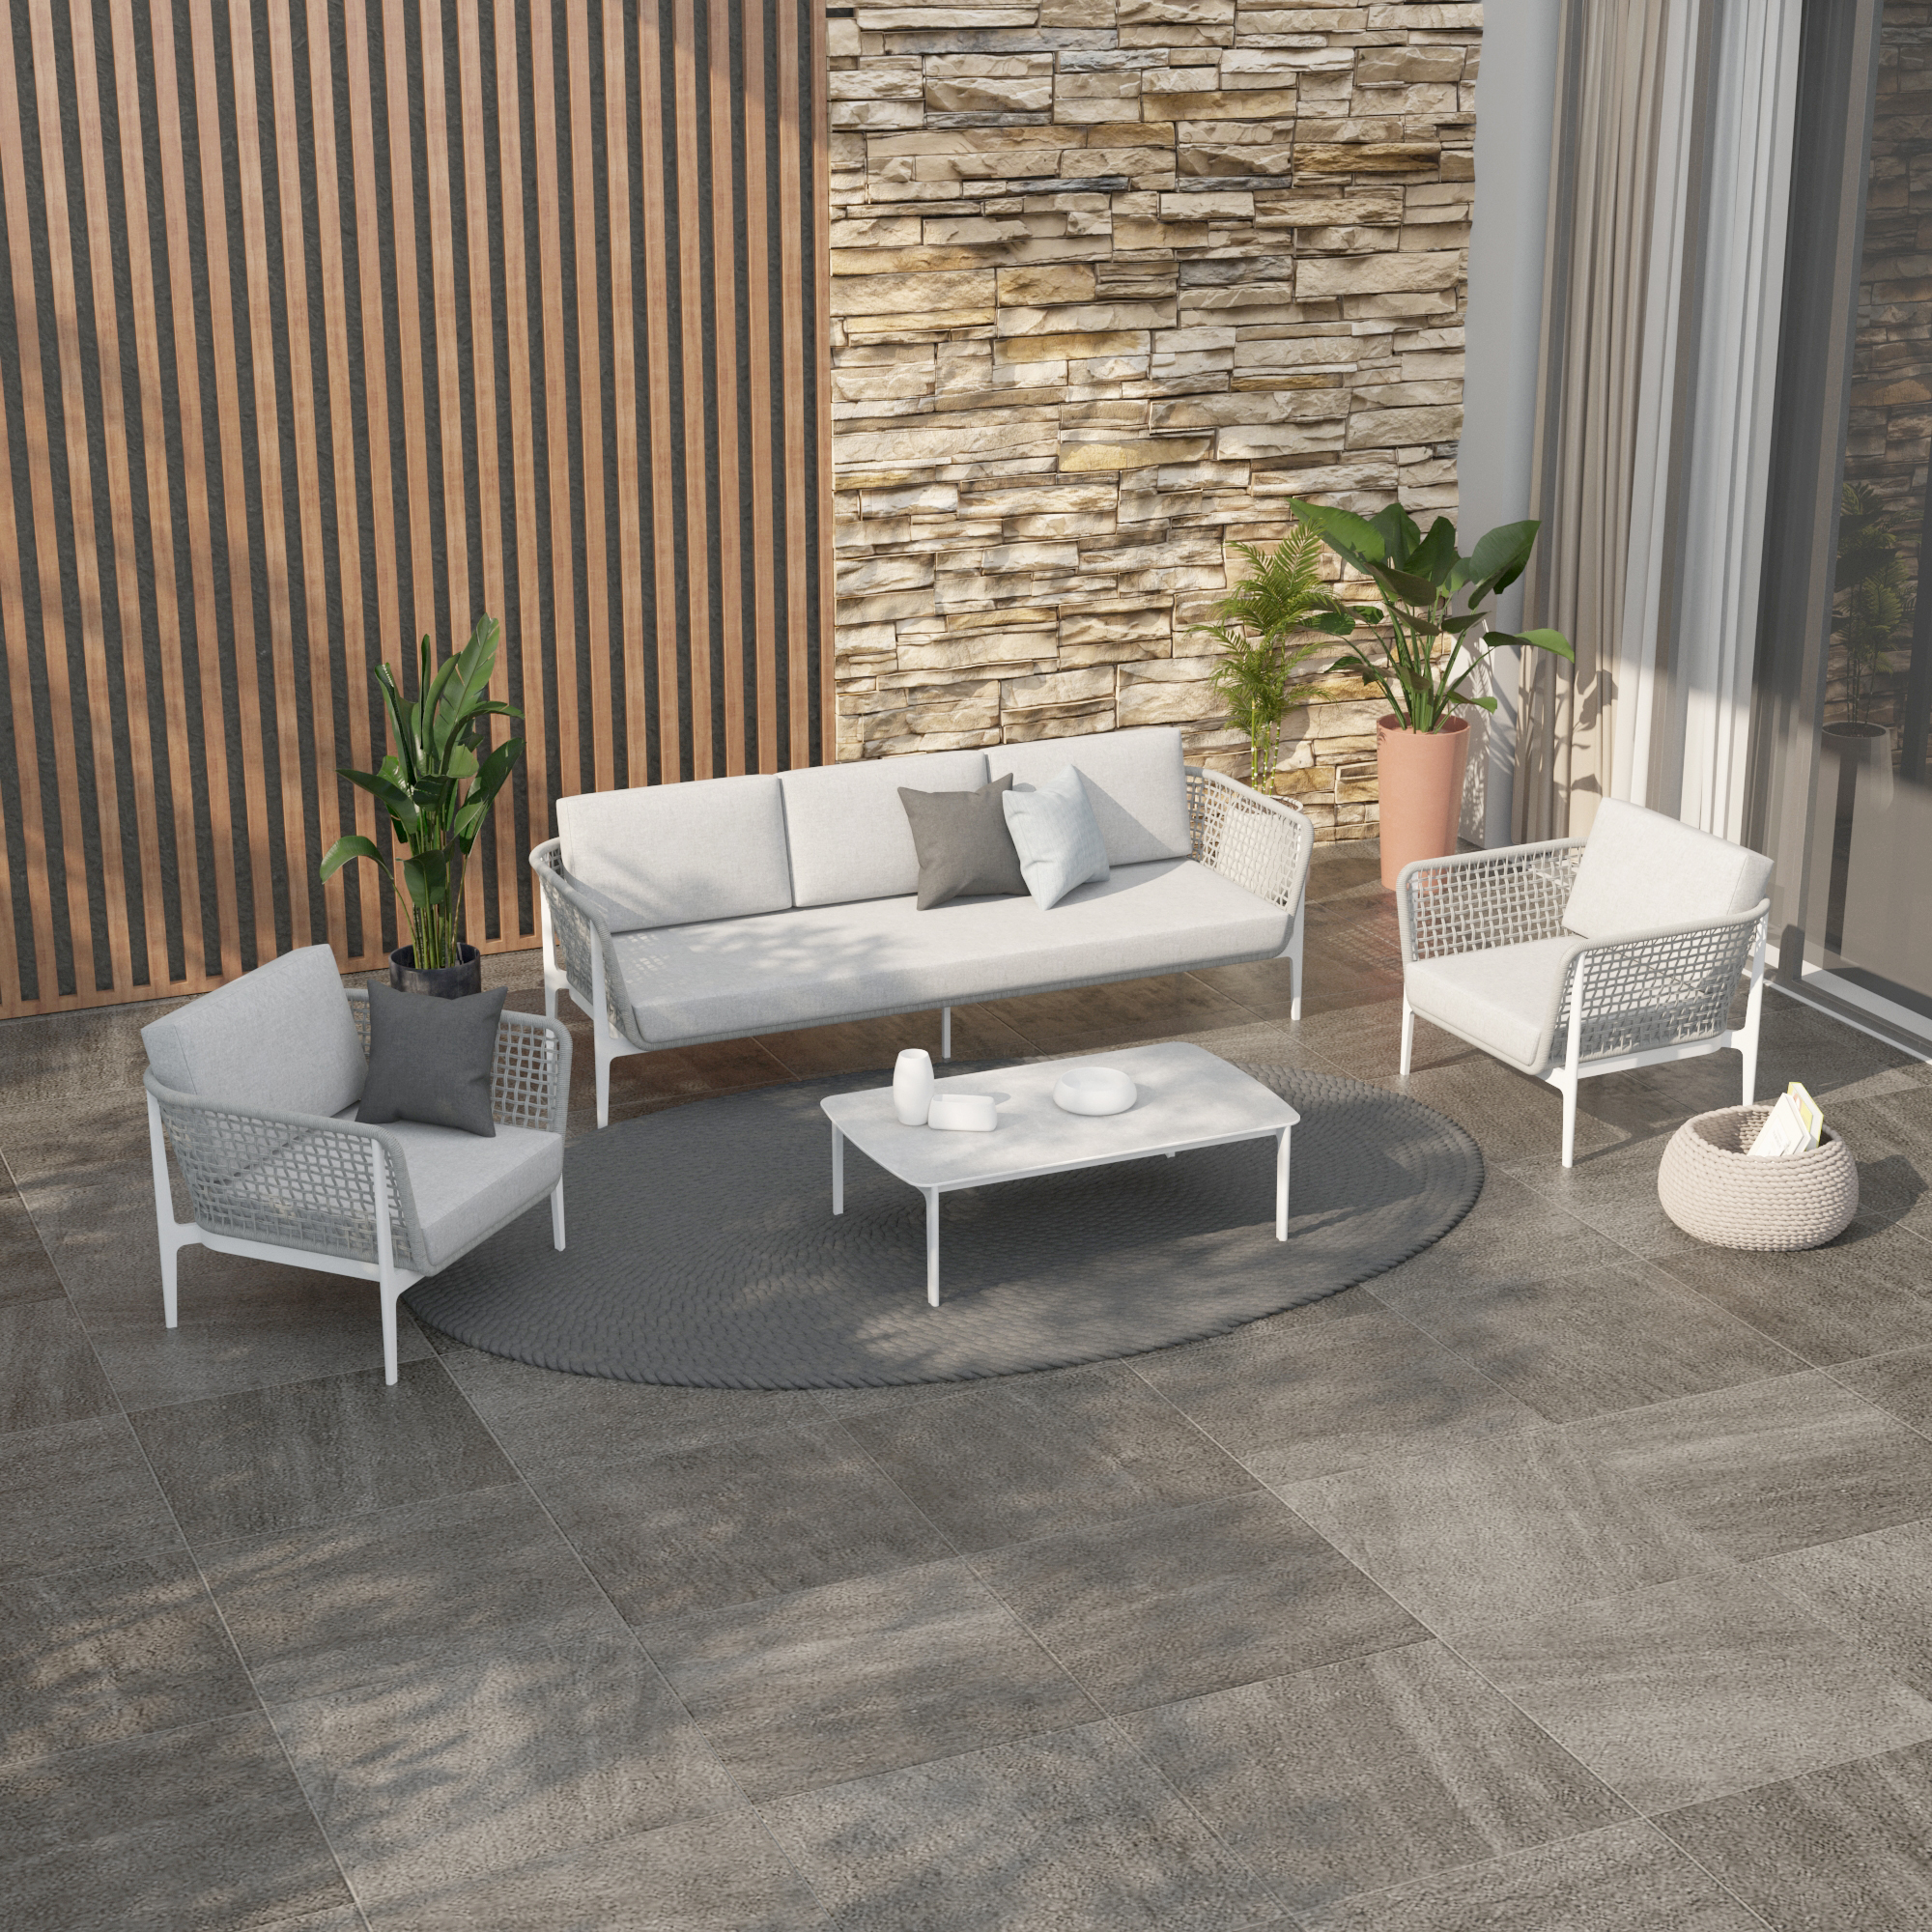 CETUS Aluminum Conversation Patio Sofa Set -Baeryon Furniture